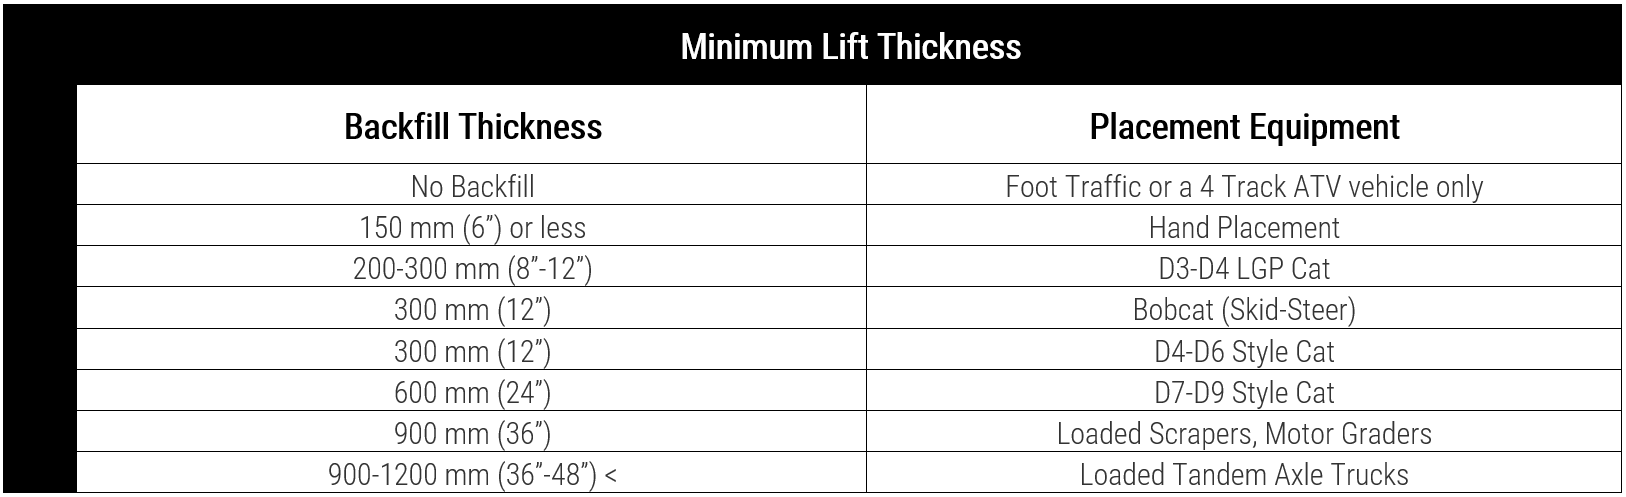 Minimum Lift Thickness Chart